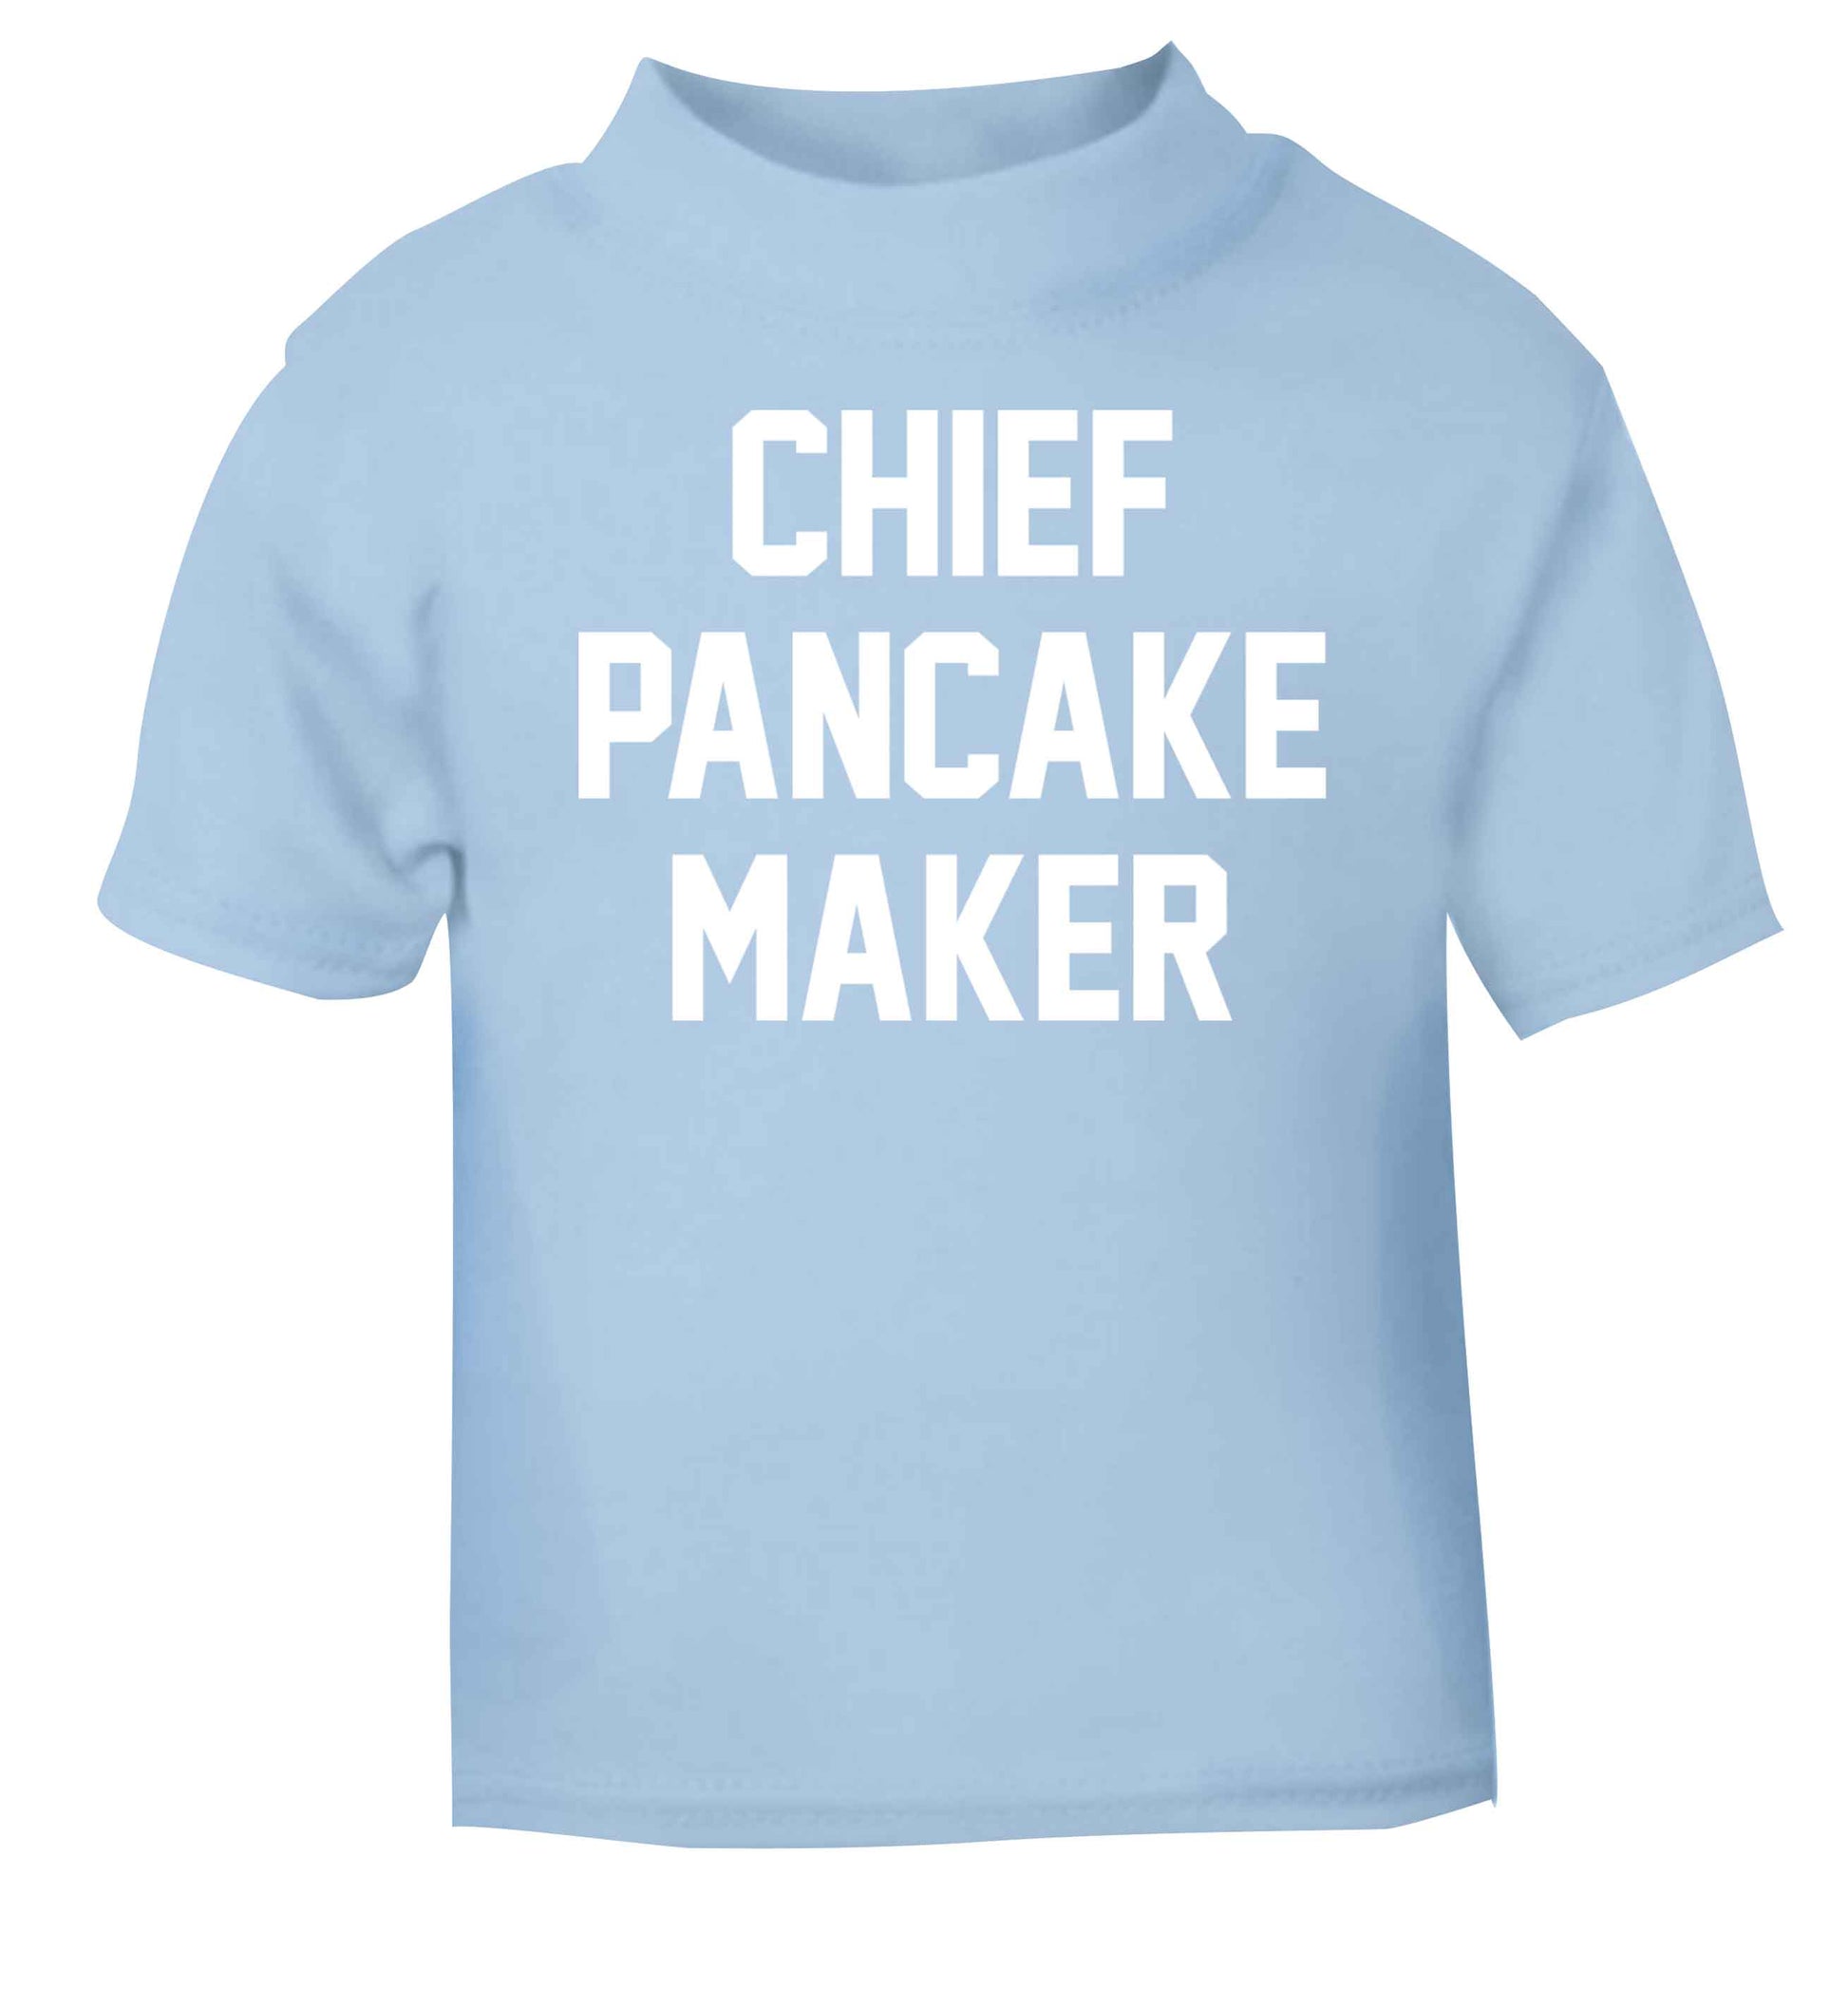 Chief pancake maker light blue baby toddler Tshirt 2 Years